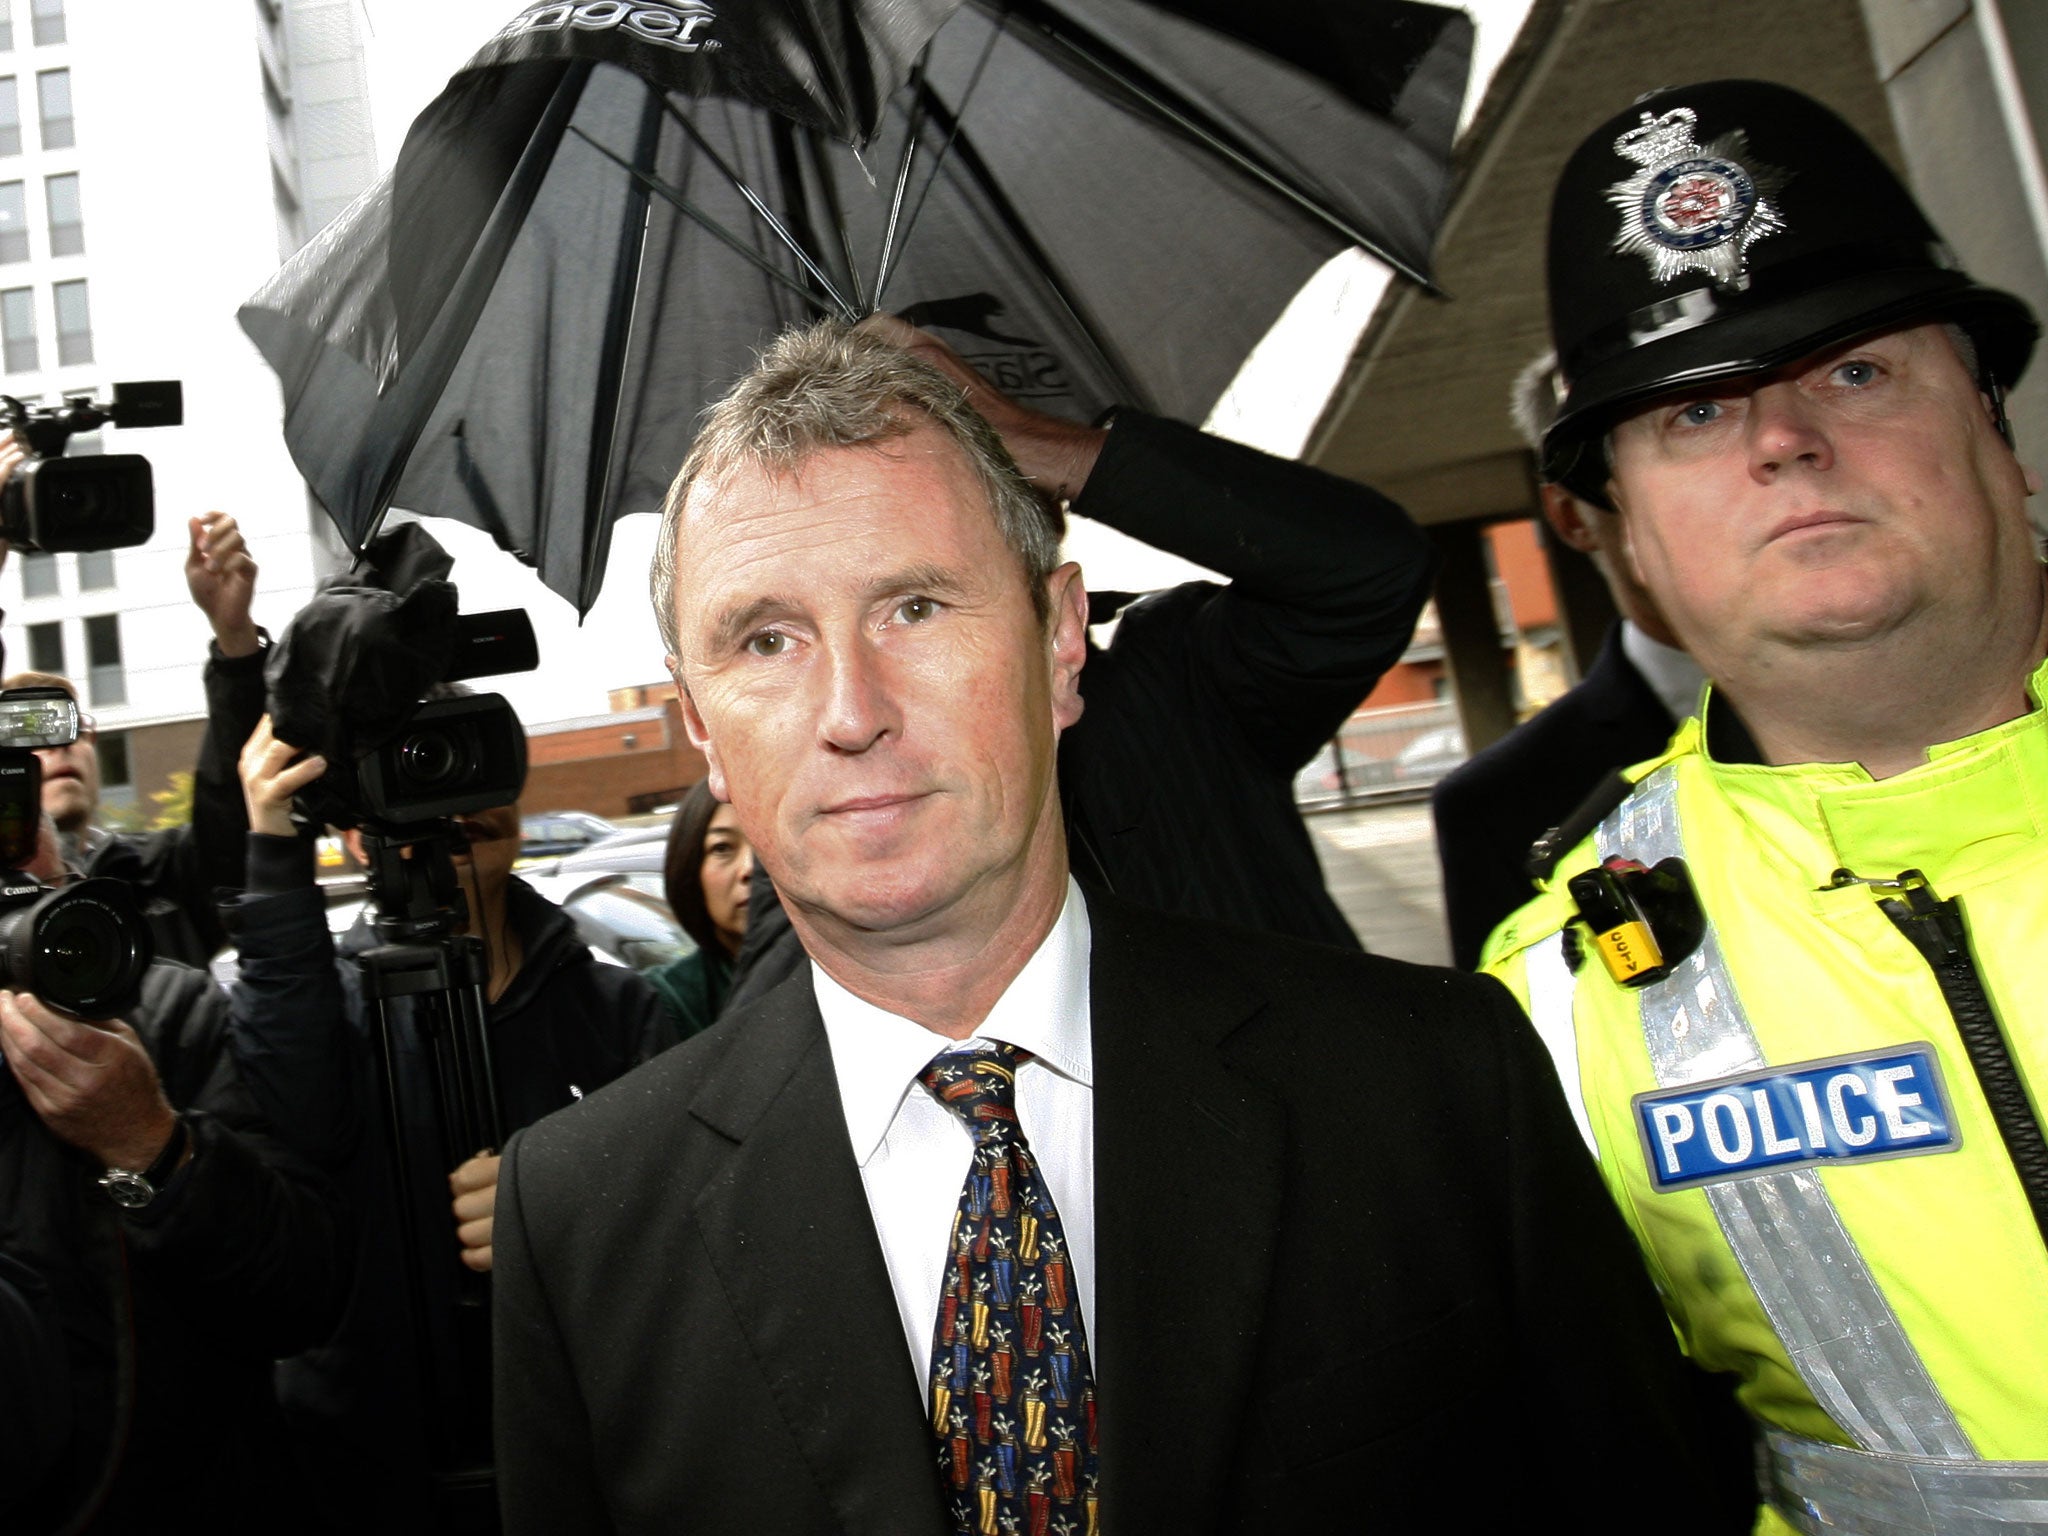 Nigel Evans was found not guilty of rape last week following a five-week trial